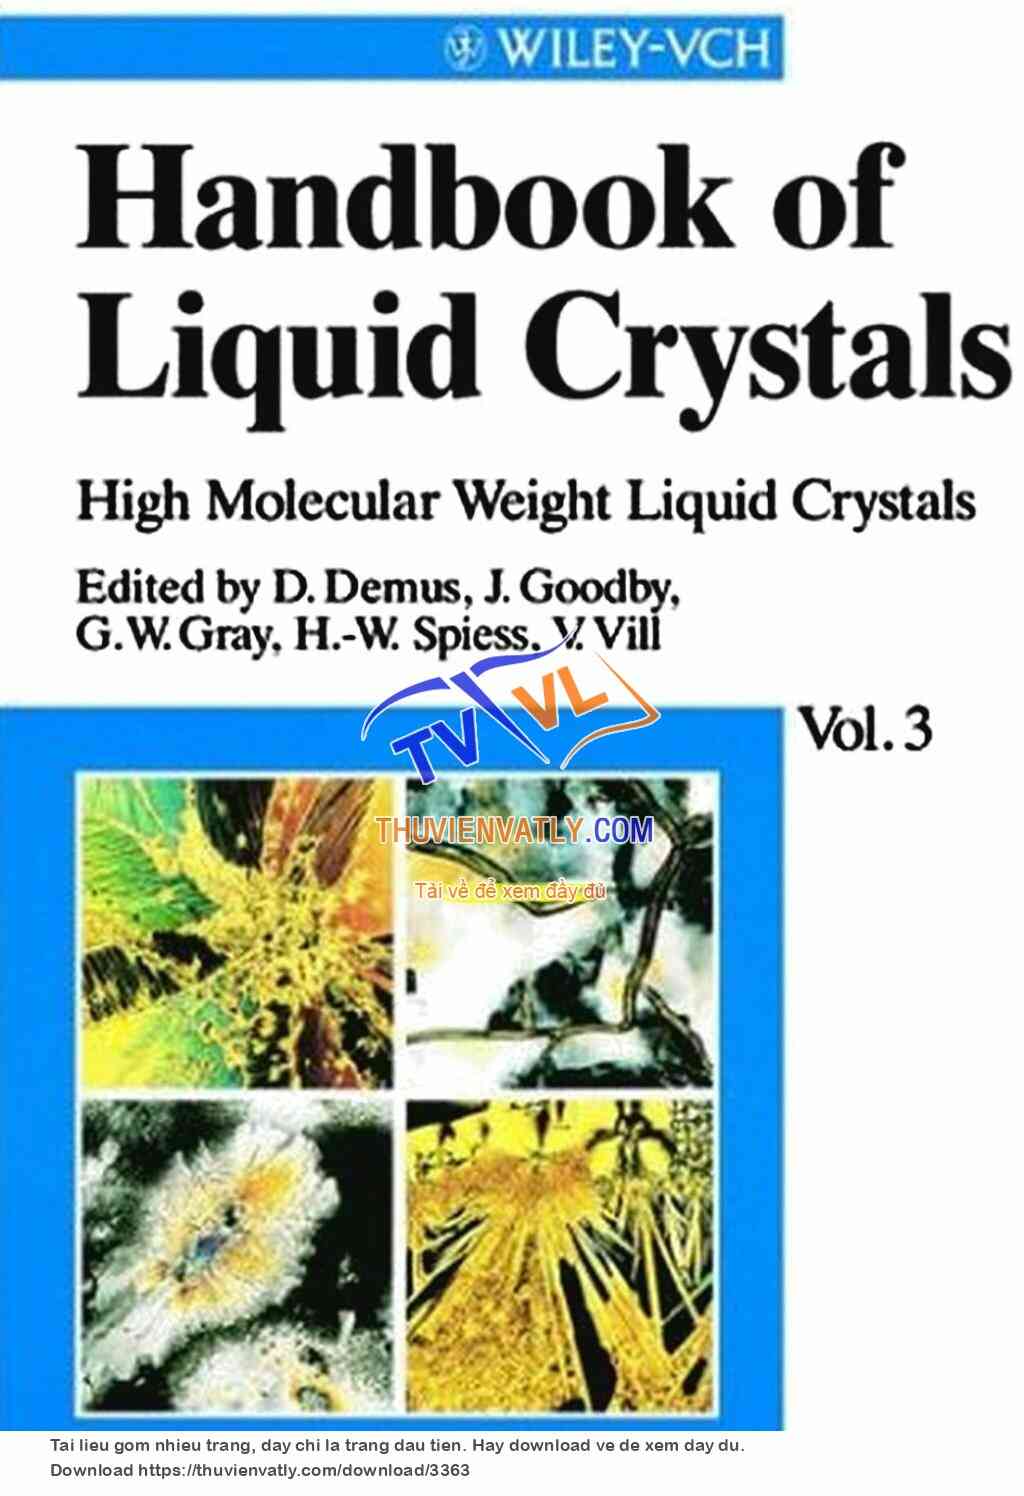 Handbook of Liquid Crystals__Vol_3 High Molecular Weight Liquid Crystals